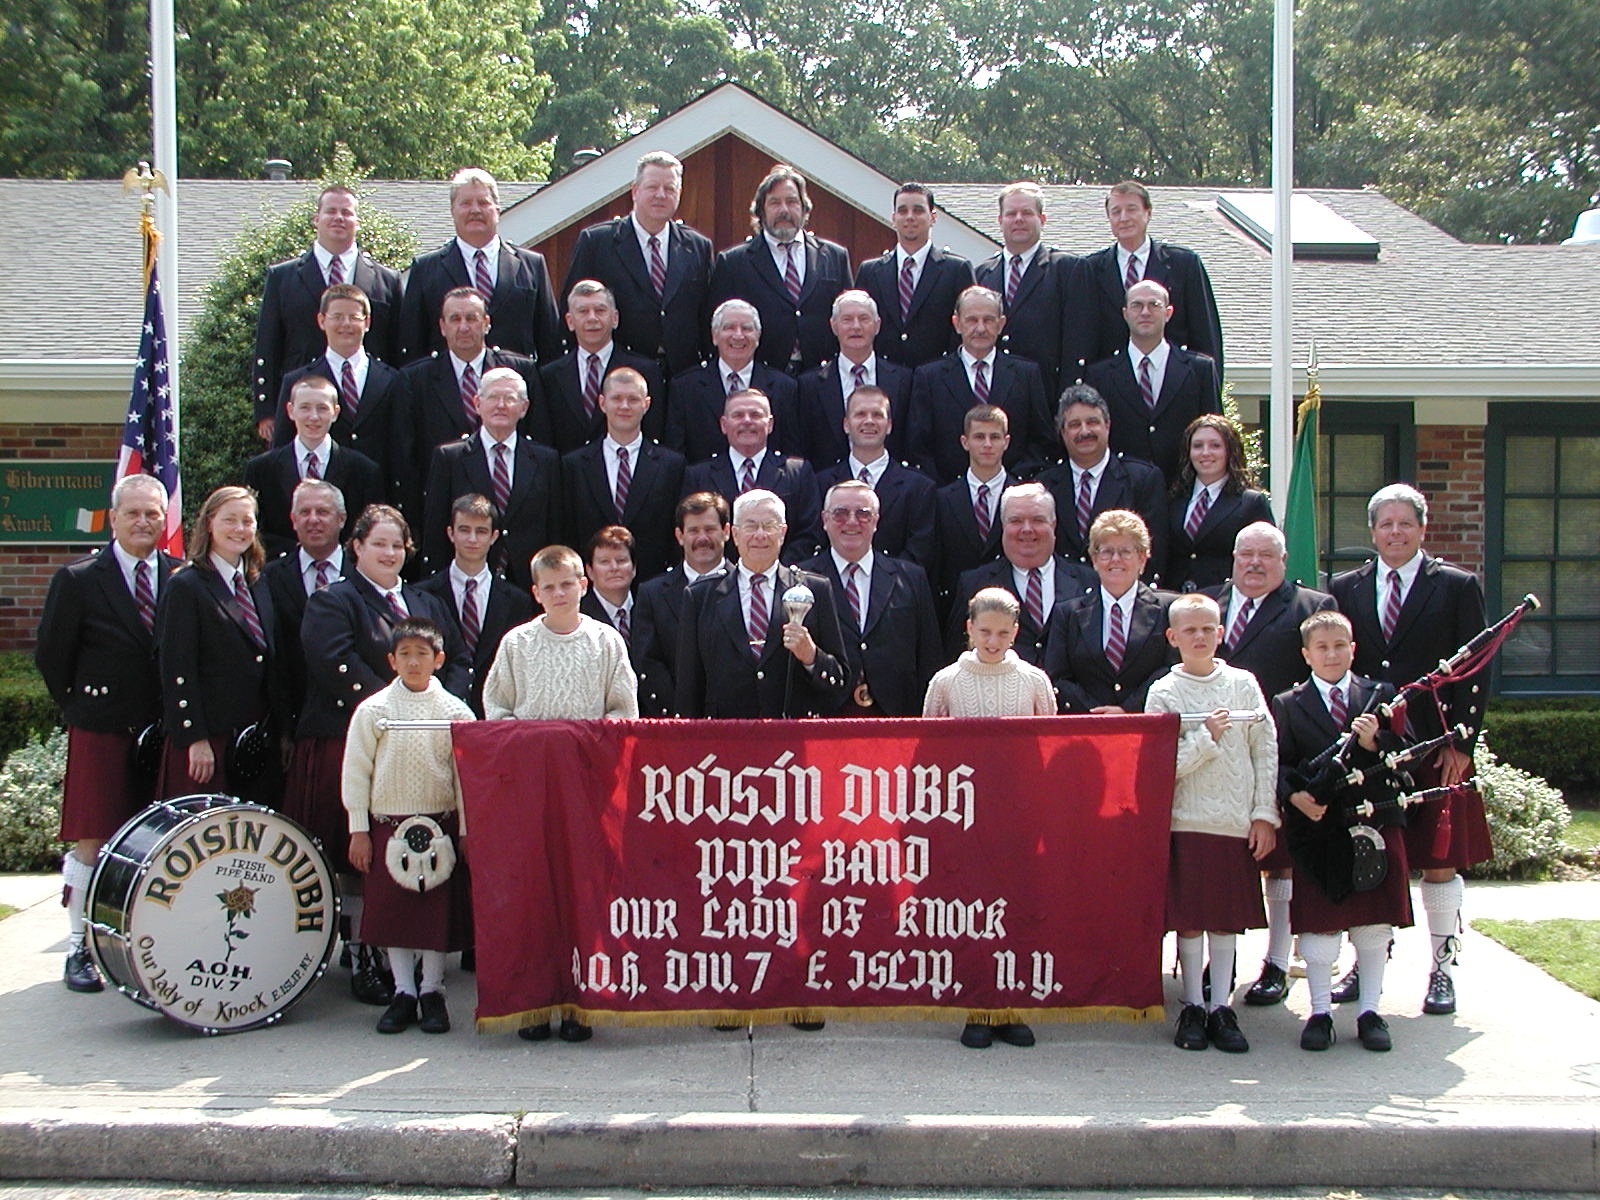 Roisin Dubh Pipe Band - 2003